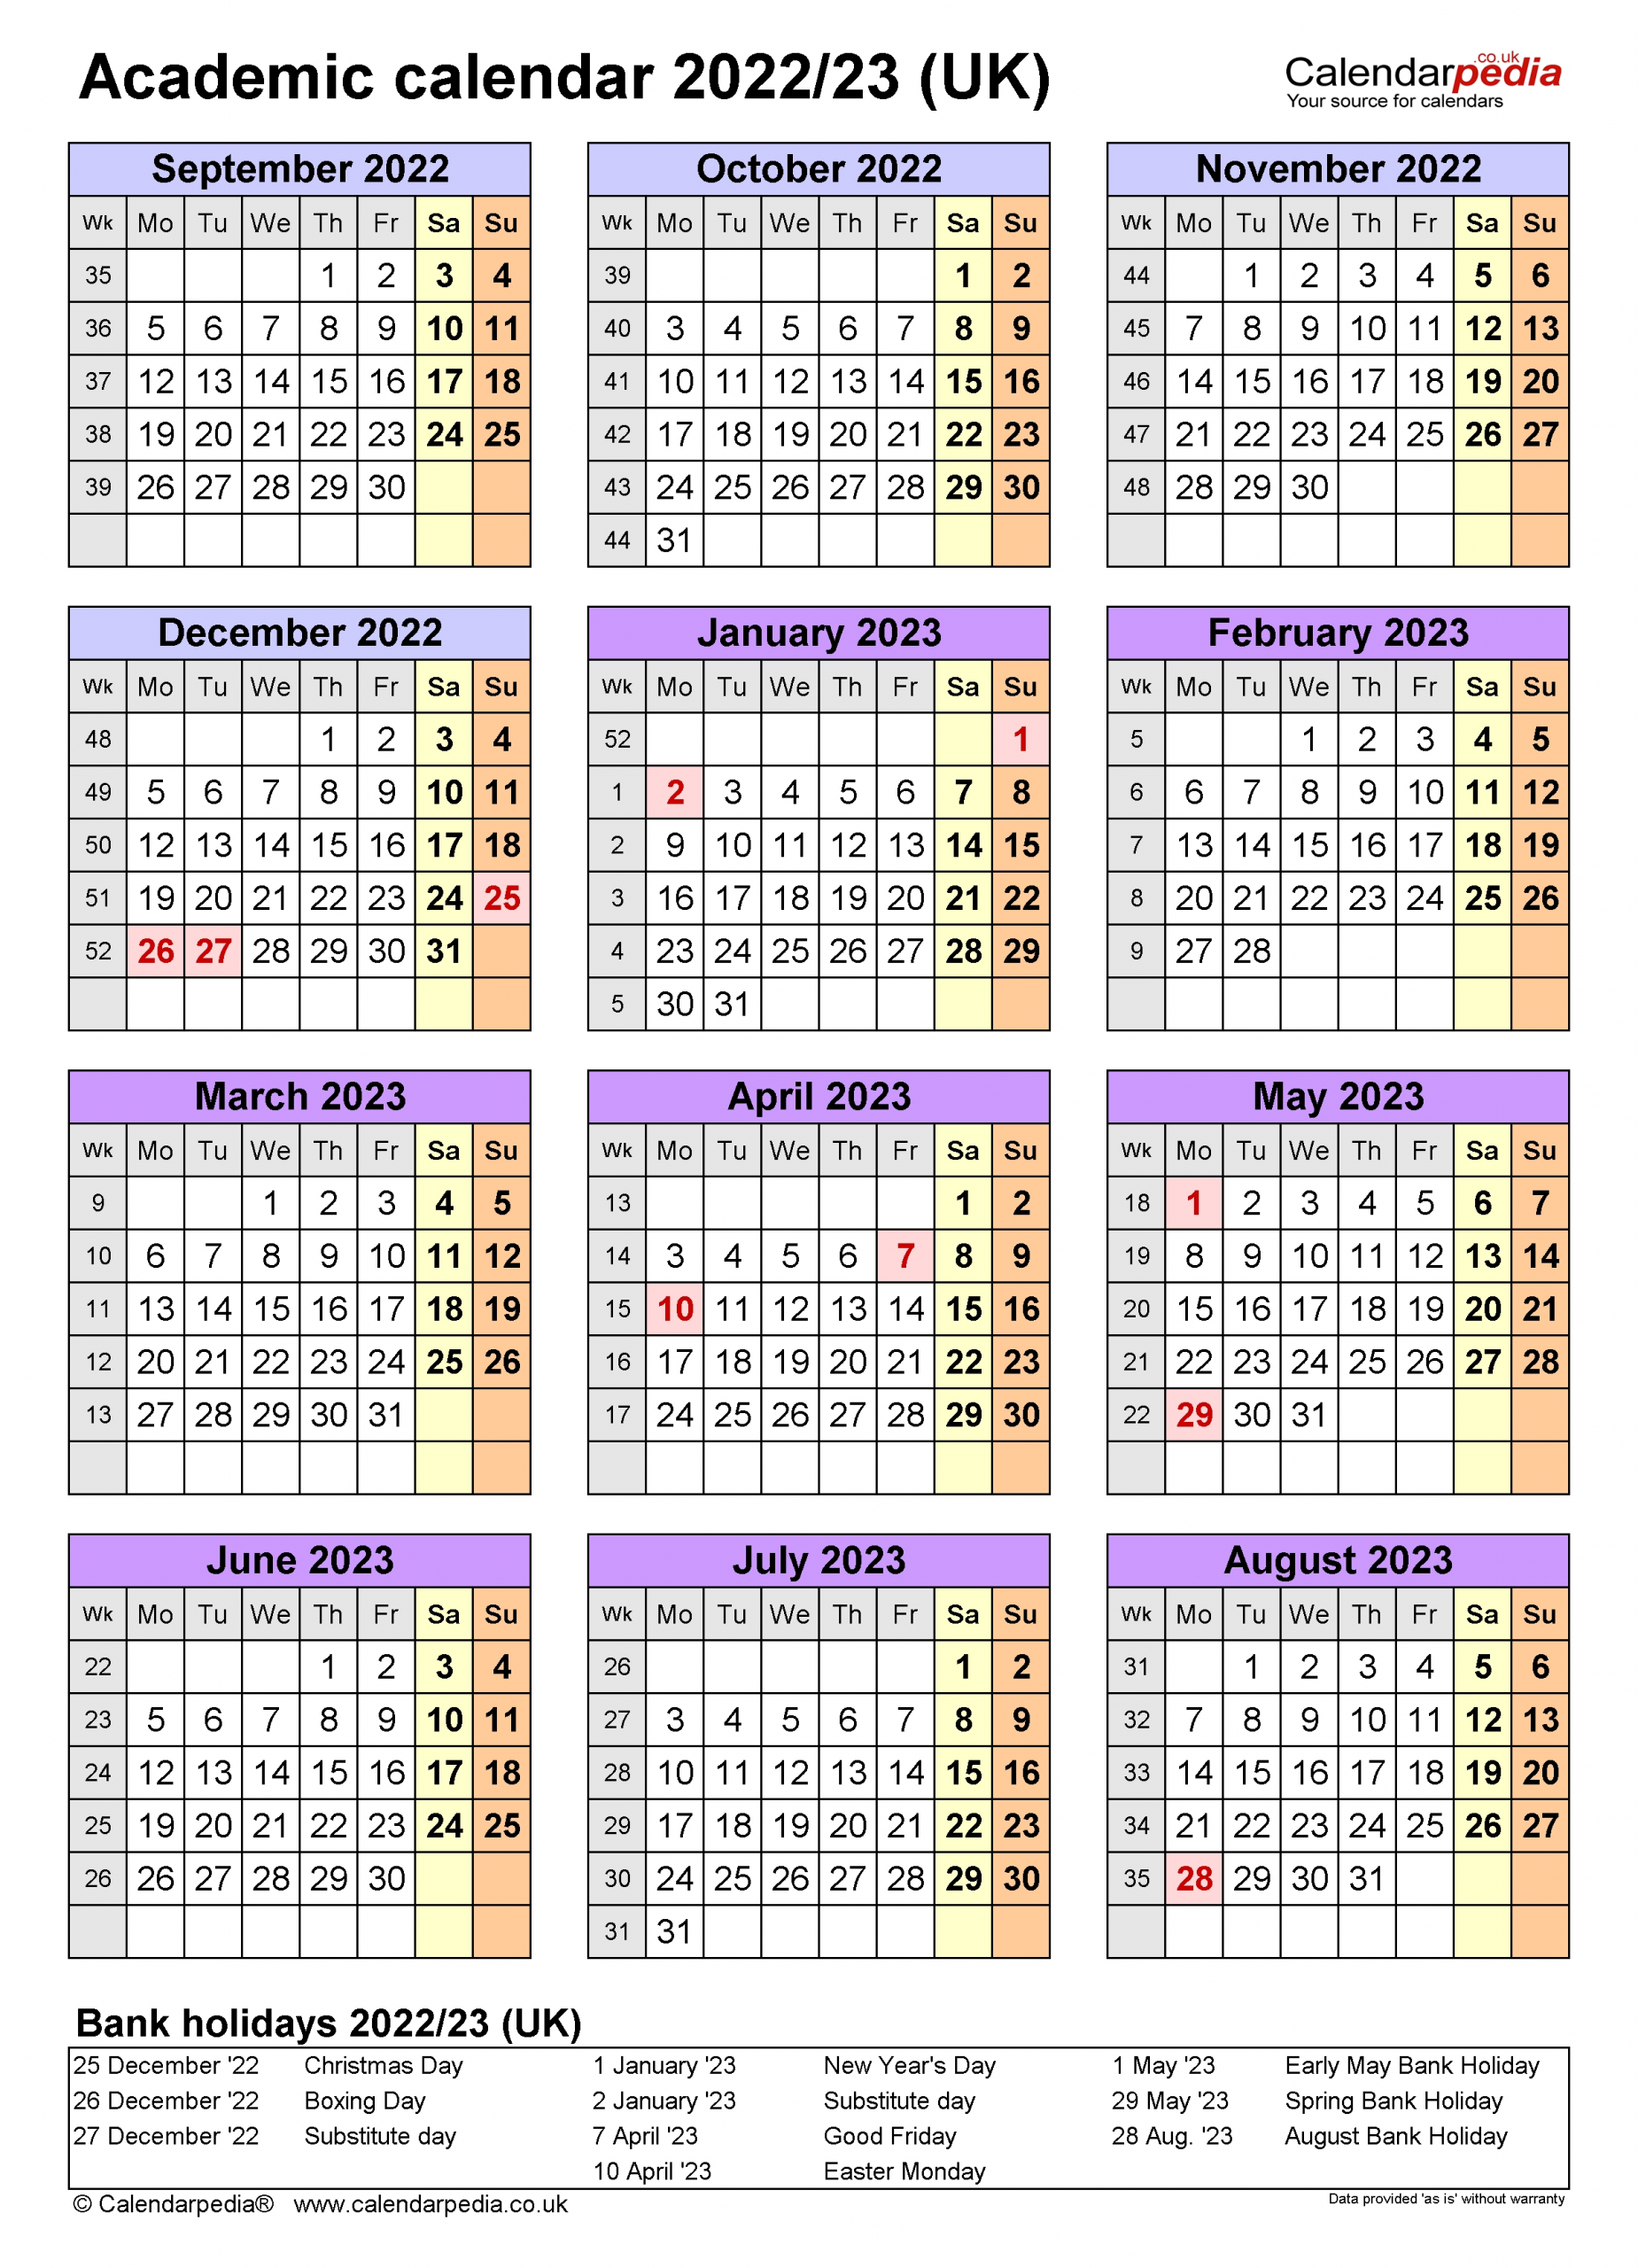 Academic Calendars 2022/23 Uk - Free Printable Excel Templates